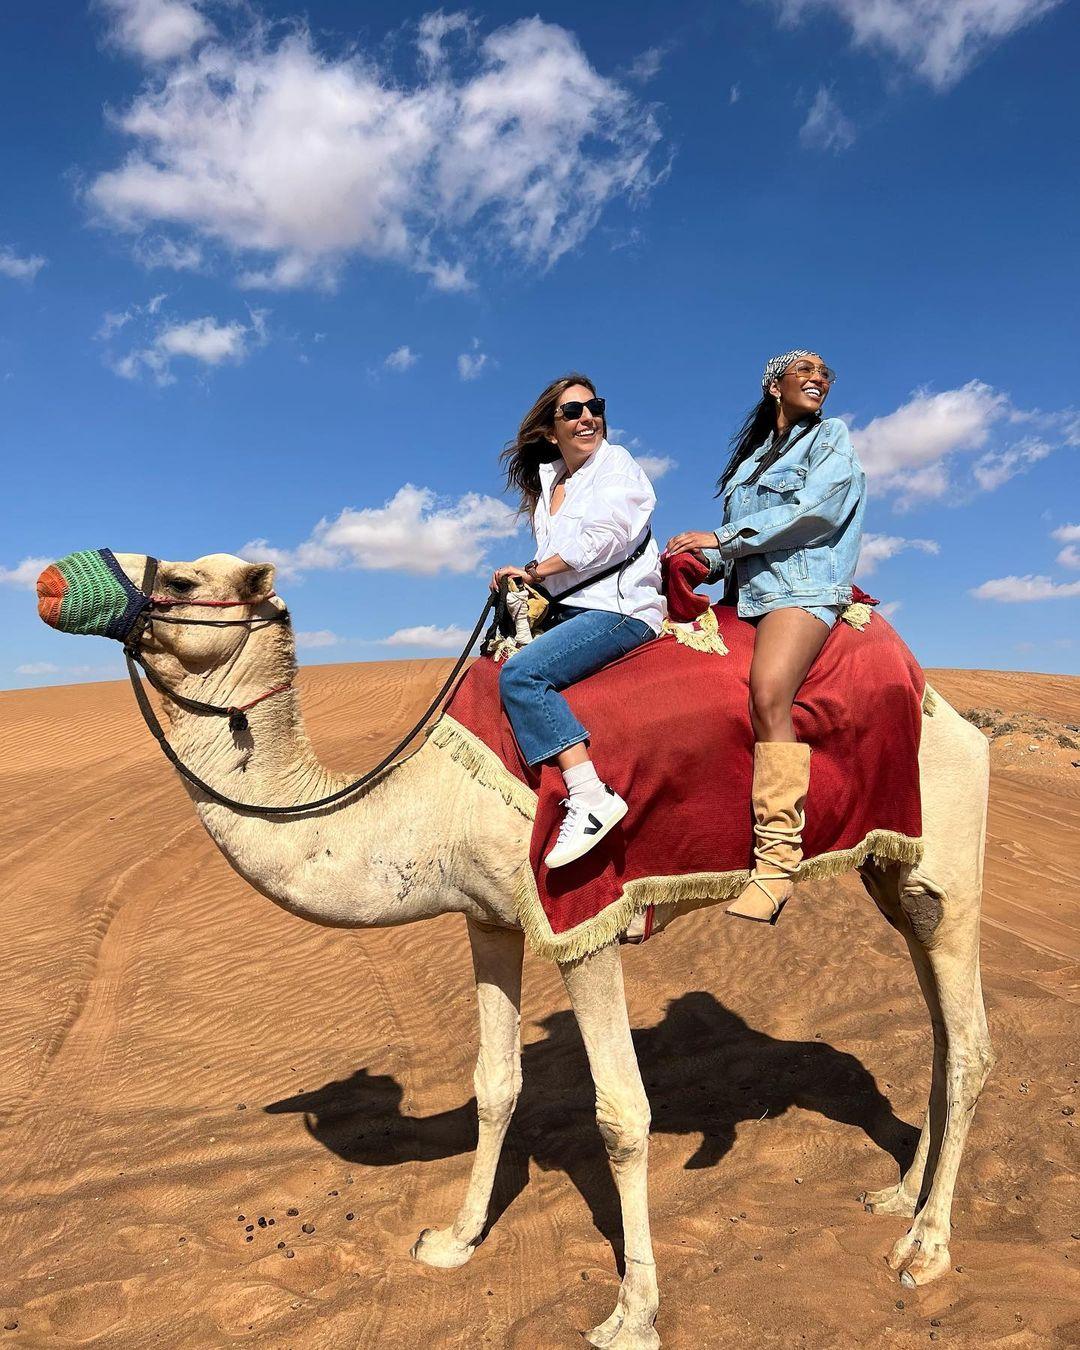 Tayshia Adams rides camel